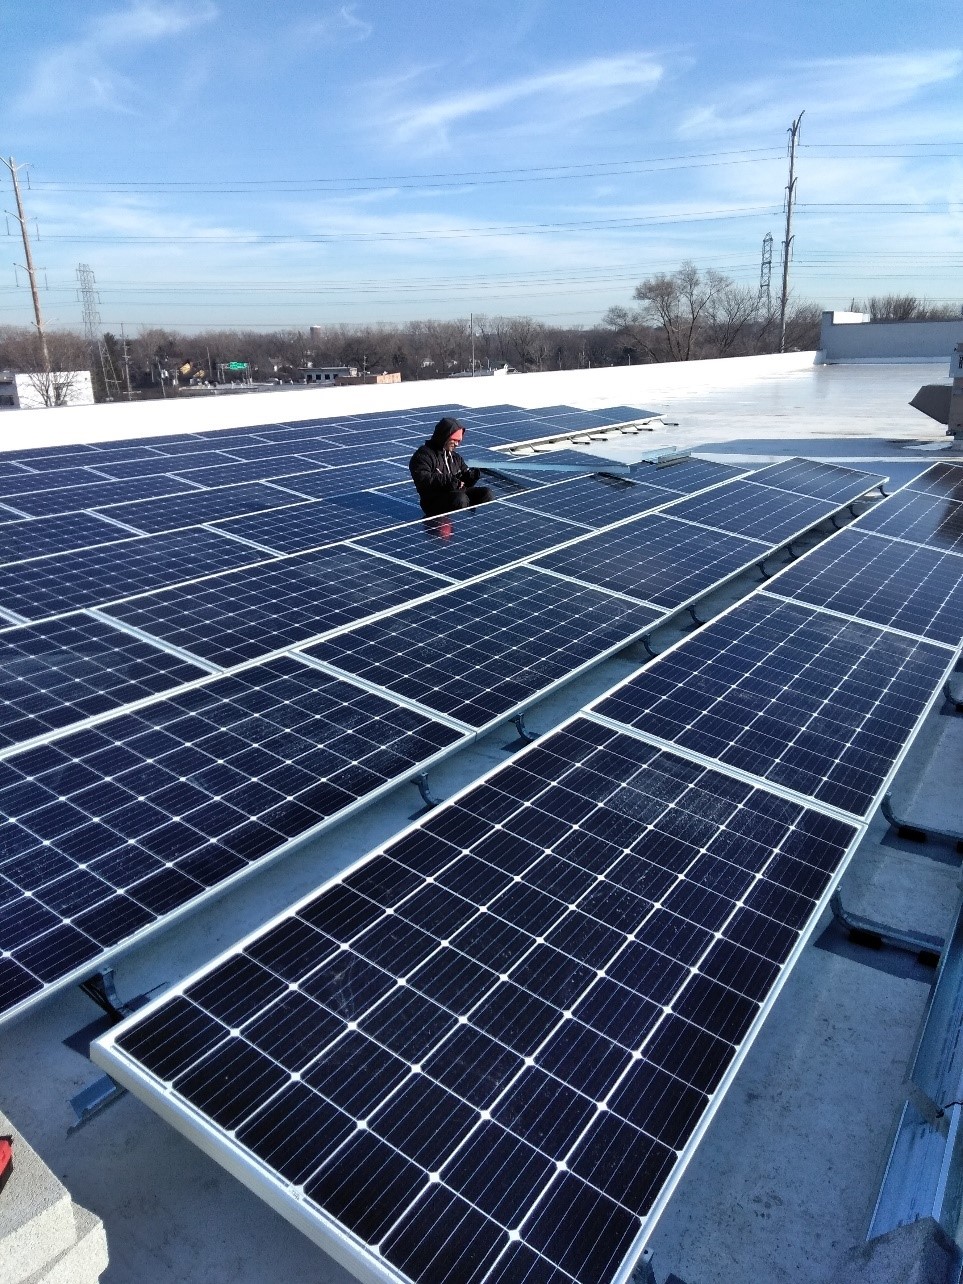 Trainee pictured on the job stie with solar panels. (Photo courtesy of Kentina Kellum, OAI, Inc.).